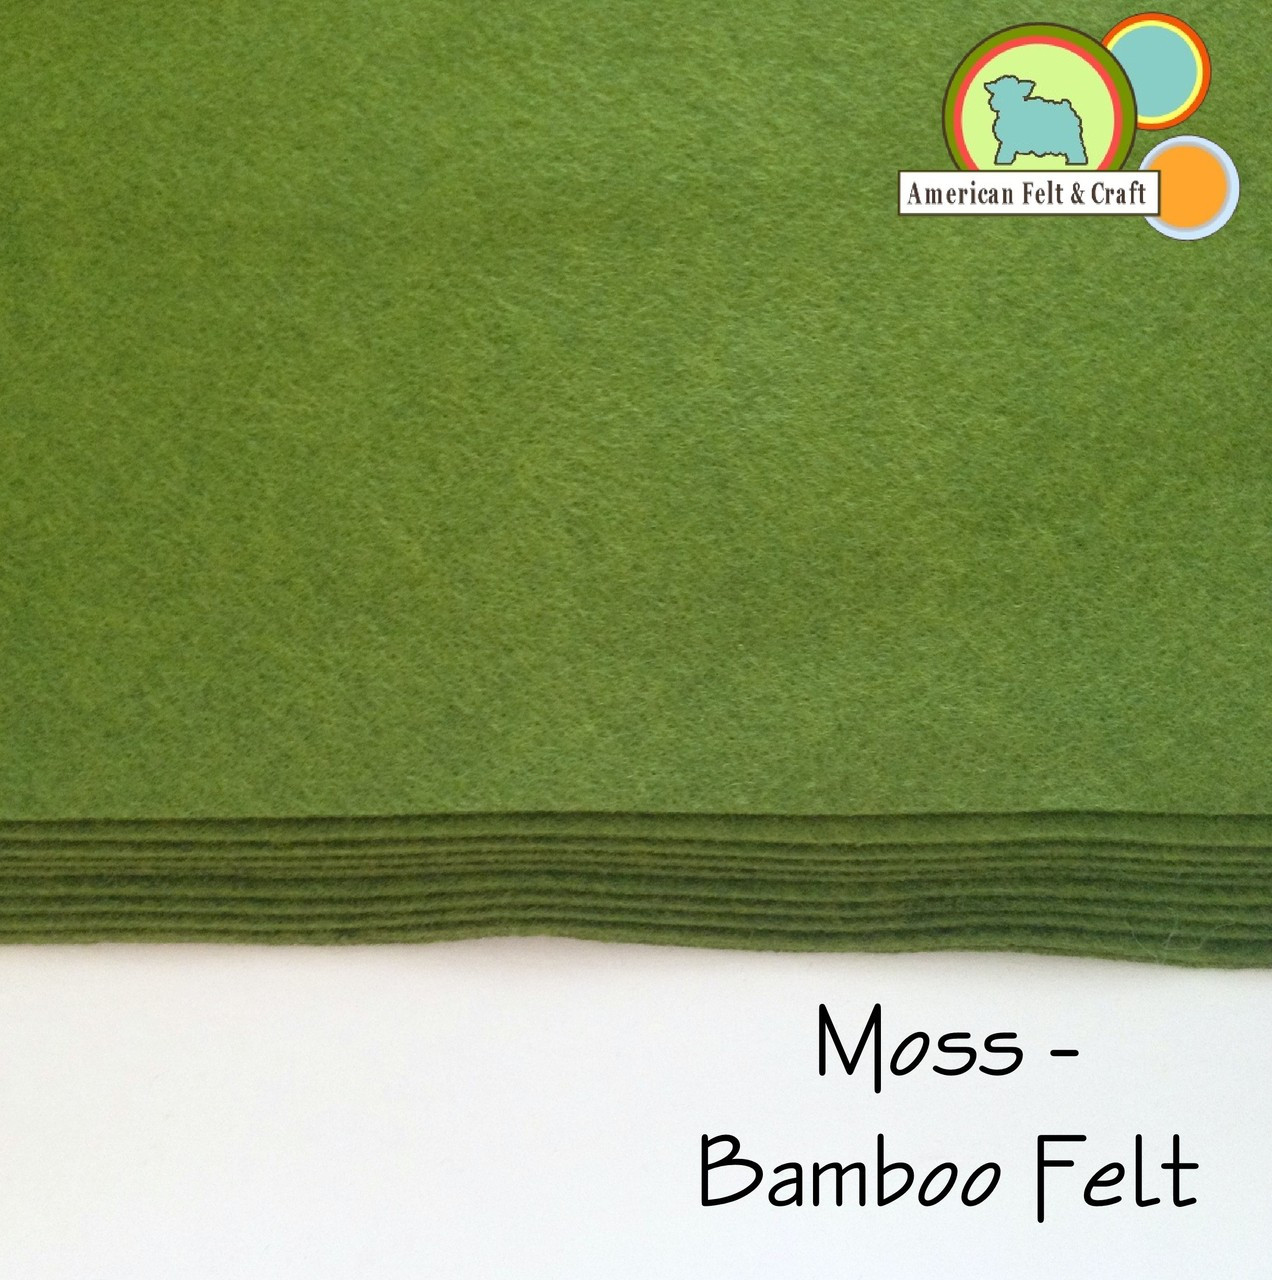 Moss - Bamboo Felt - American Felt & Craft